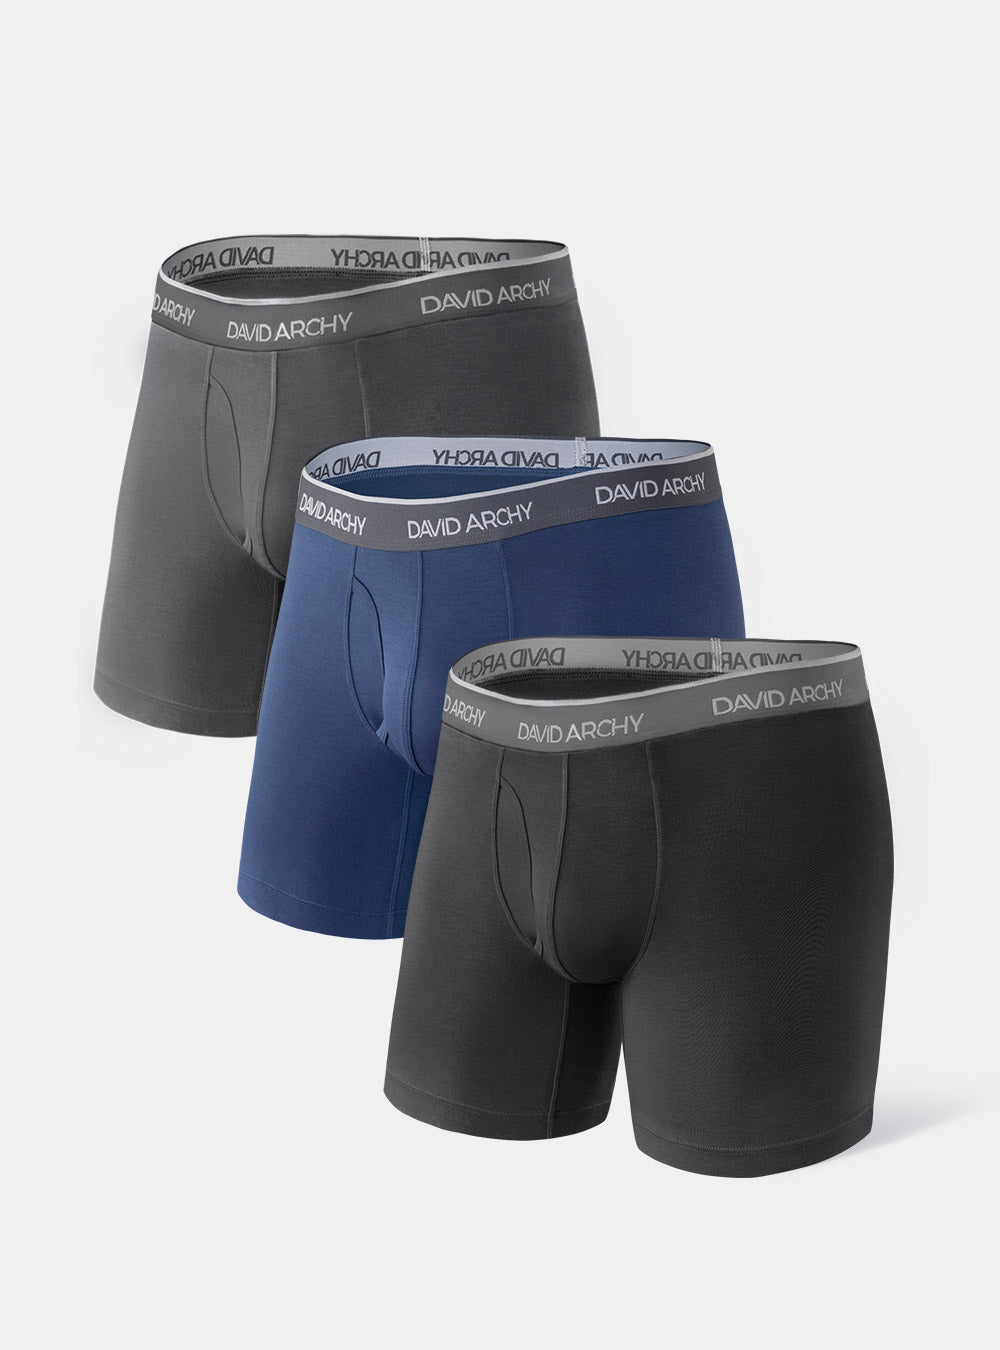 David Archy 3 Packs Leg Boxer Briefs Bamboo Rayon Ultra Soft Comfy